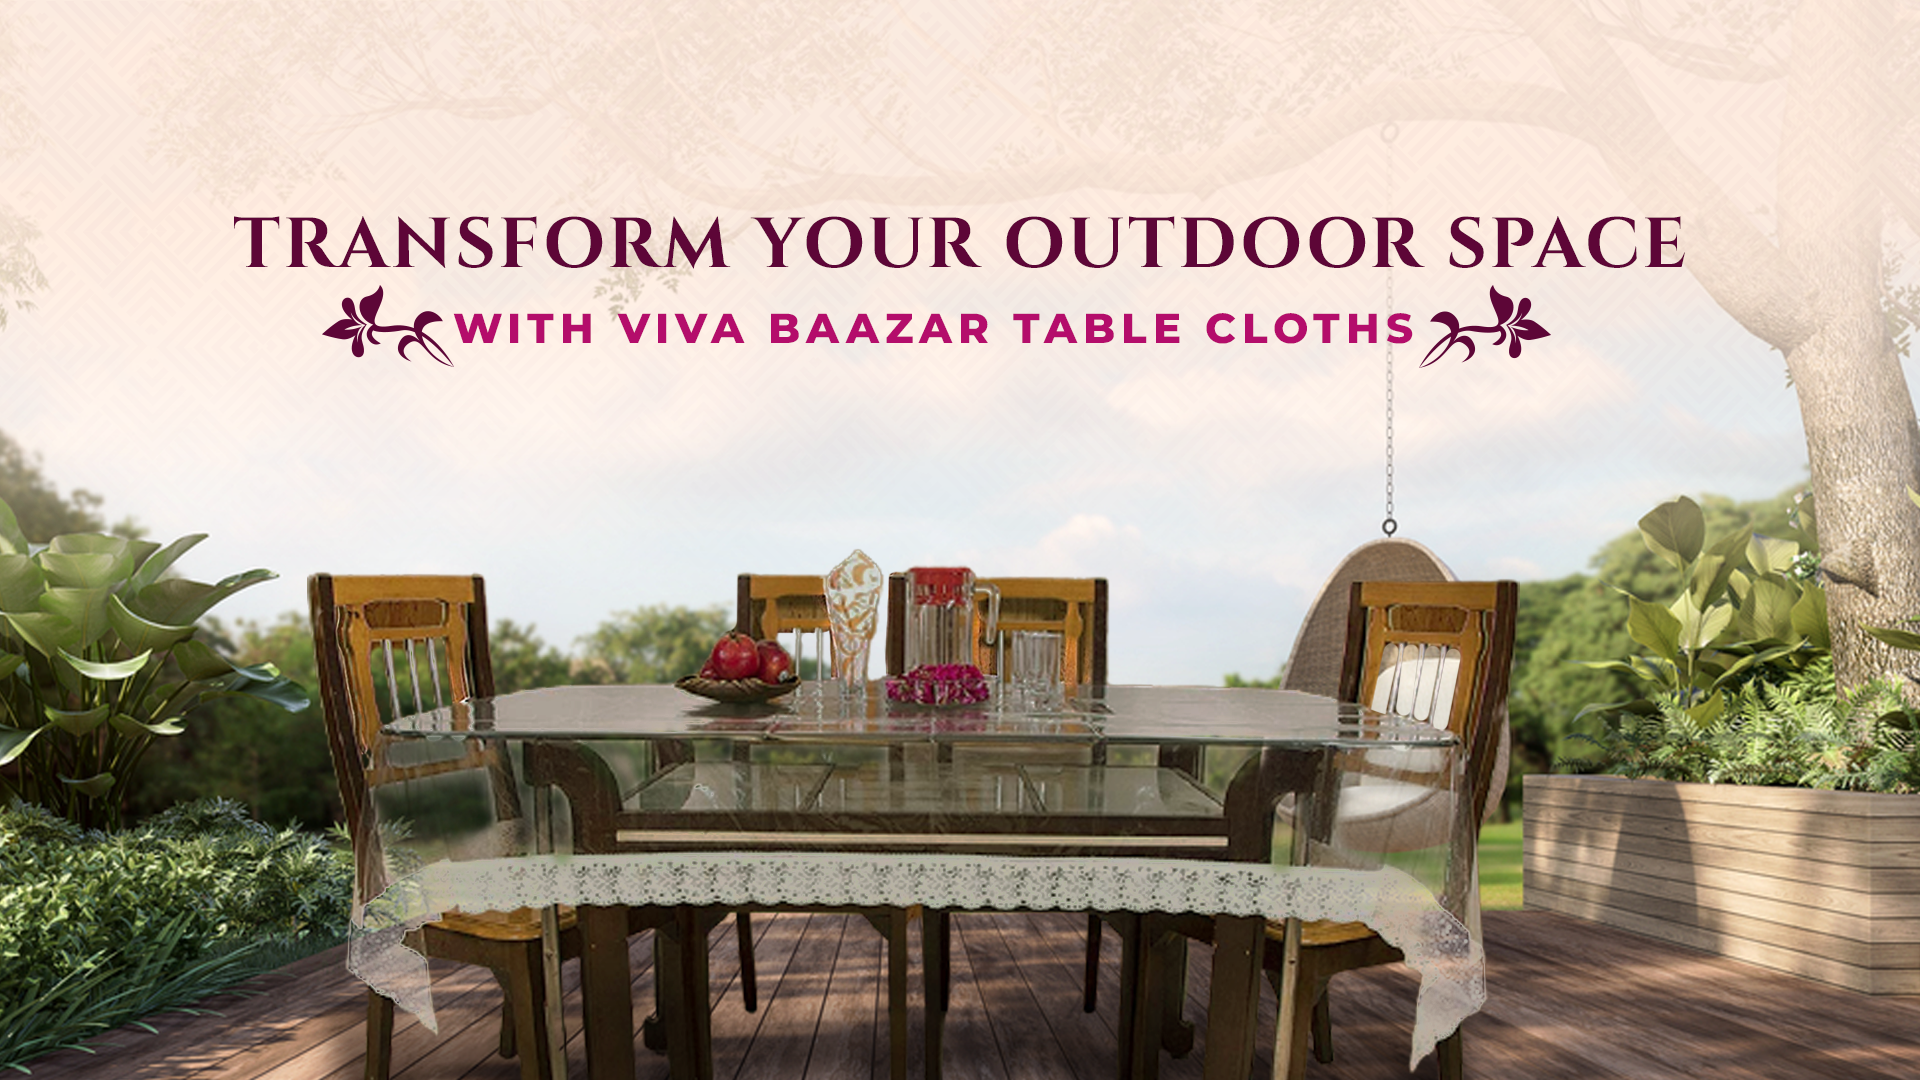 Transform Your Outdoor Space With Viva Baazar Table Cloths